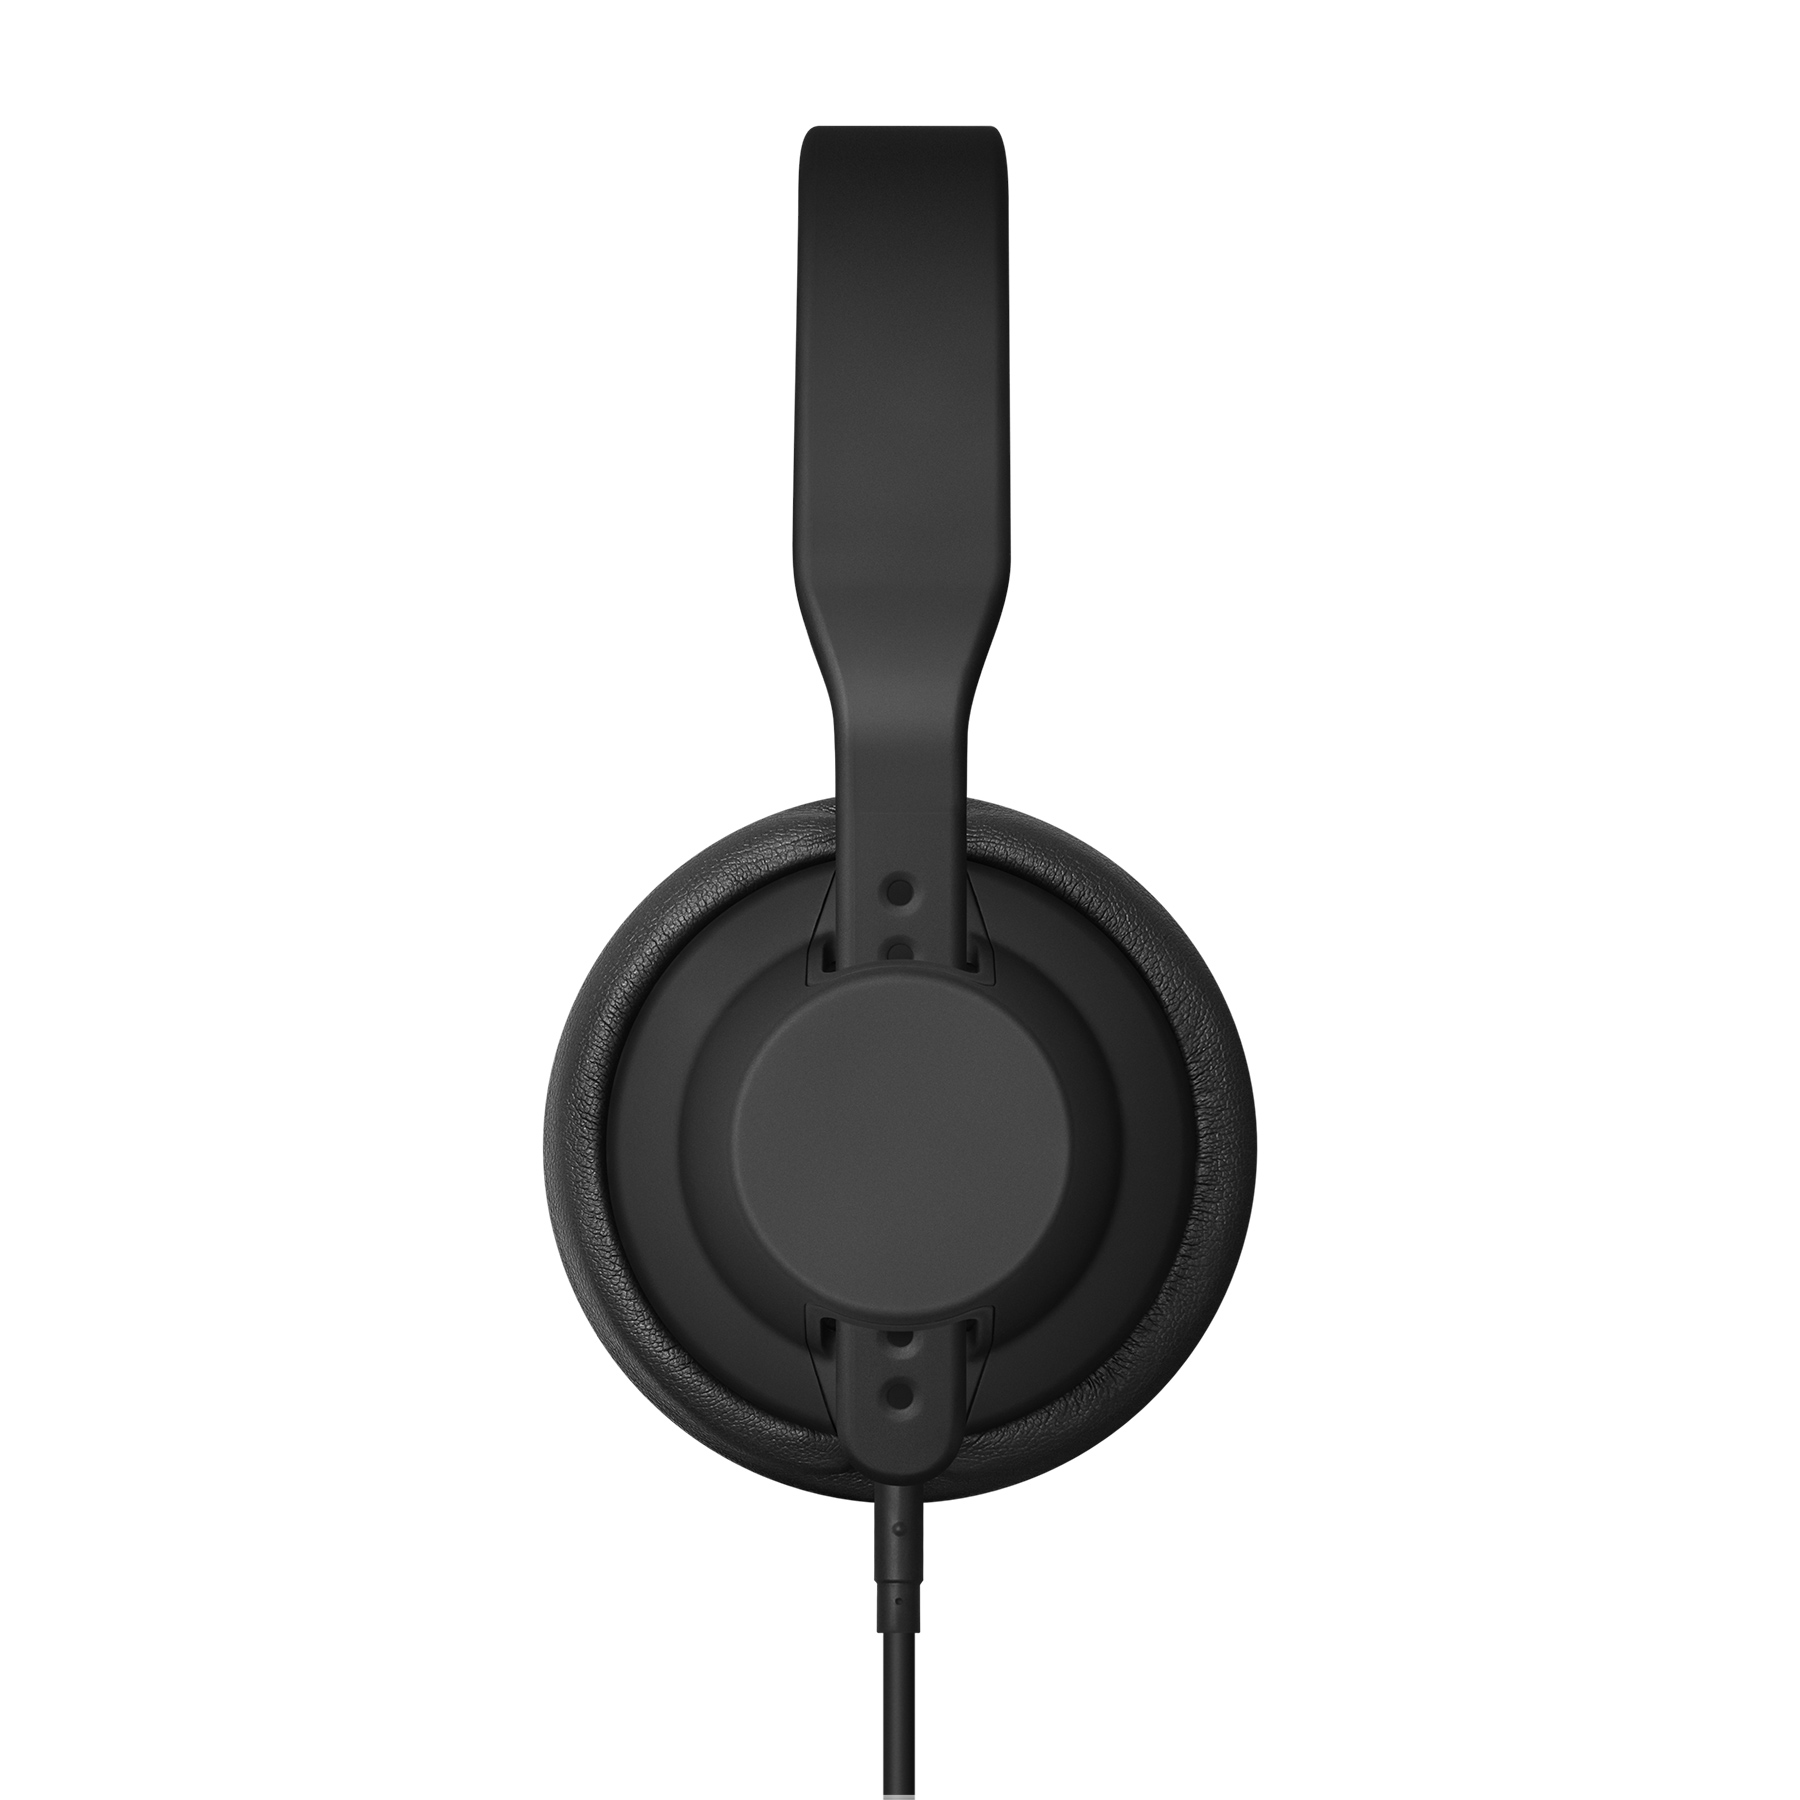 AIAIAI TMA-2 Headphone Comfort Preset Витринный образец по цене 17 000 ₽